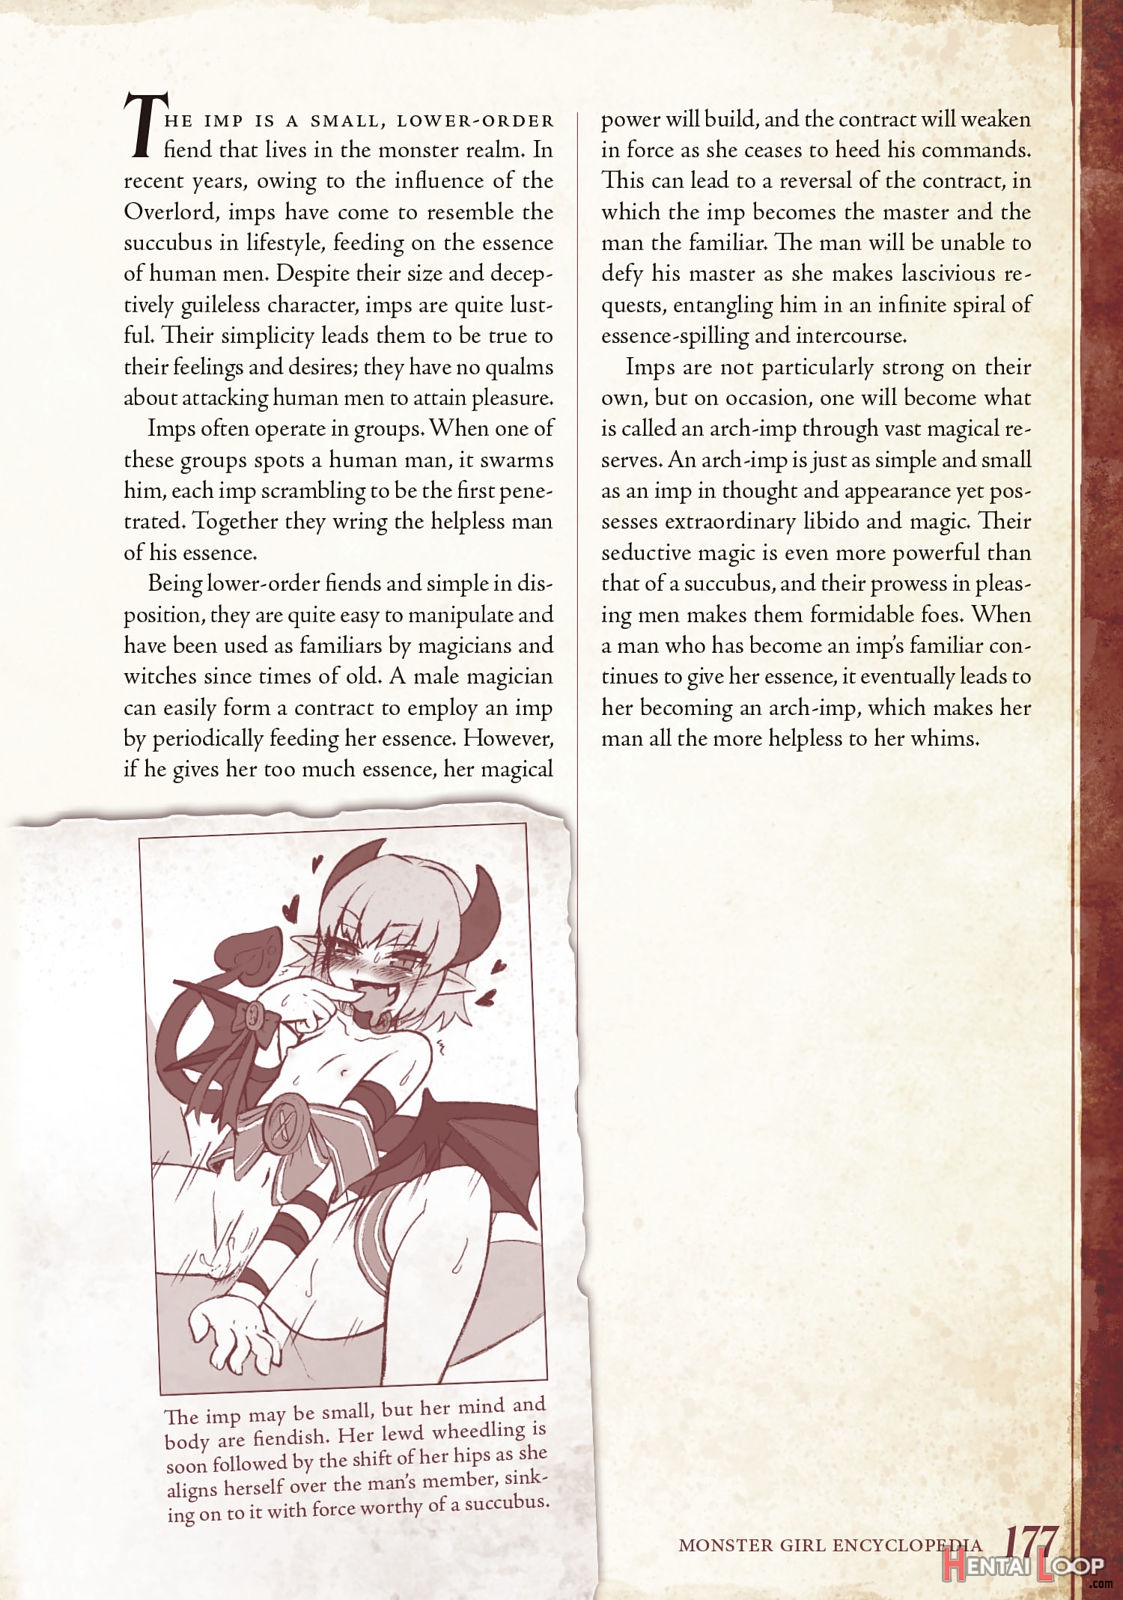 Monster Girl Encyclopedia Vol. 1 page 178